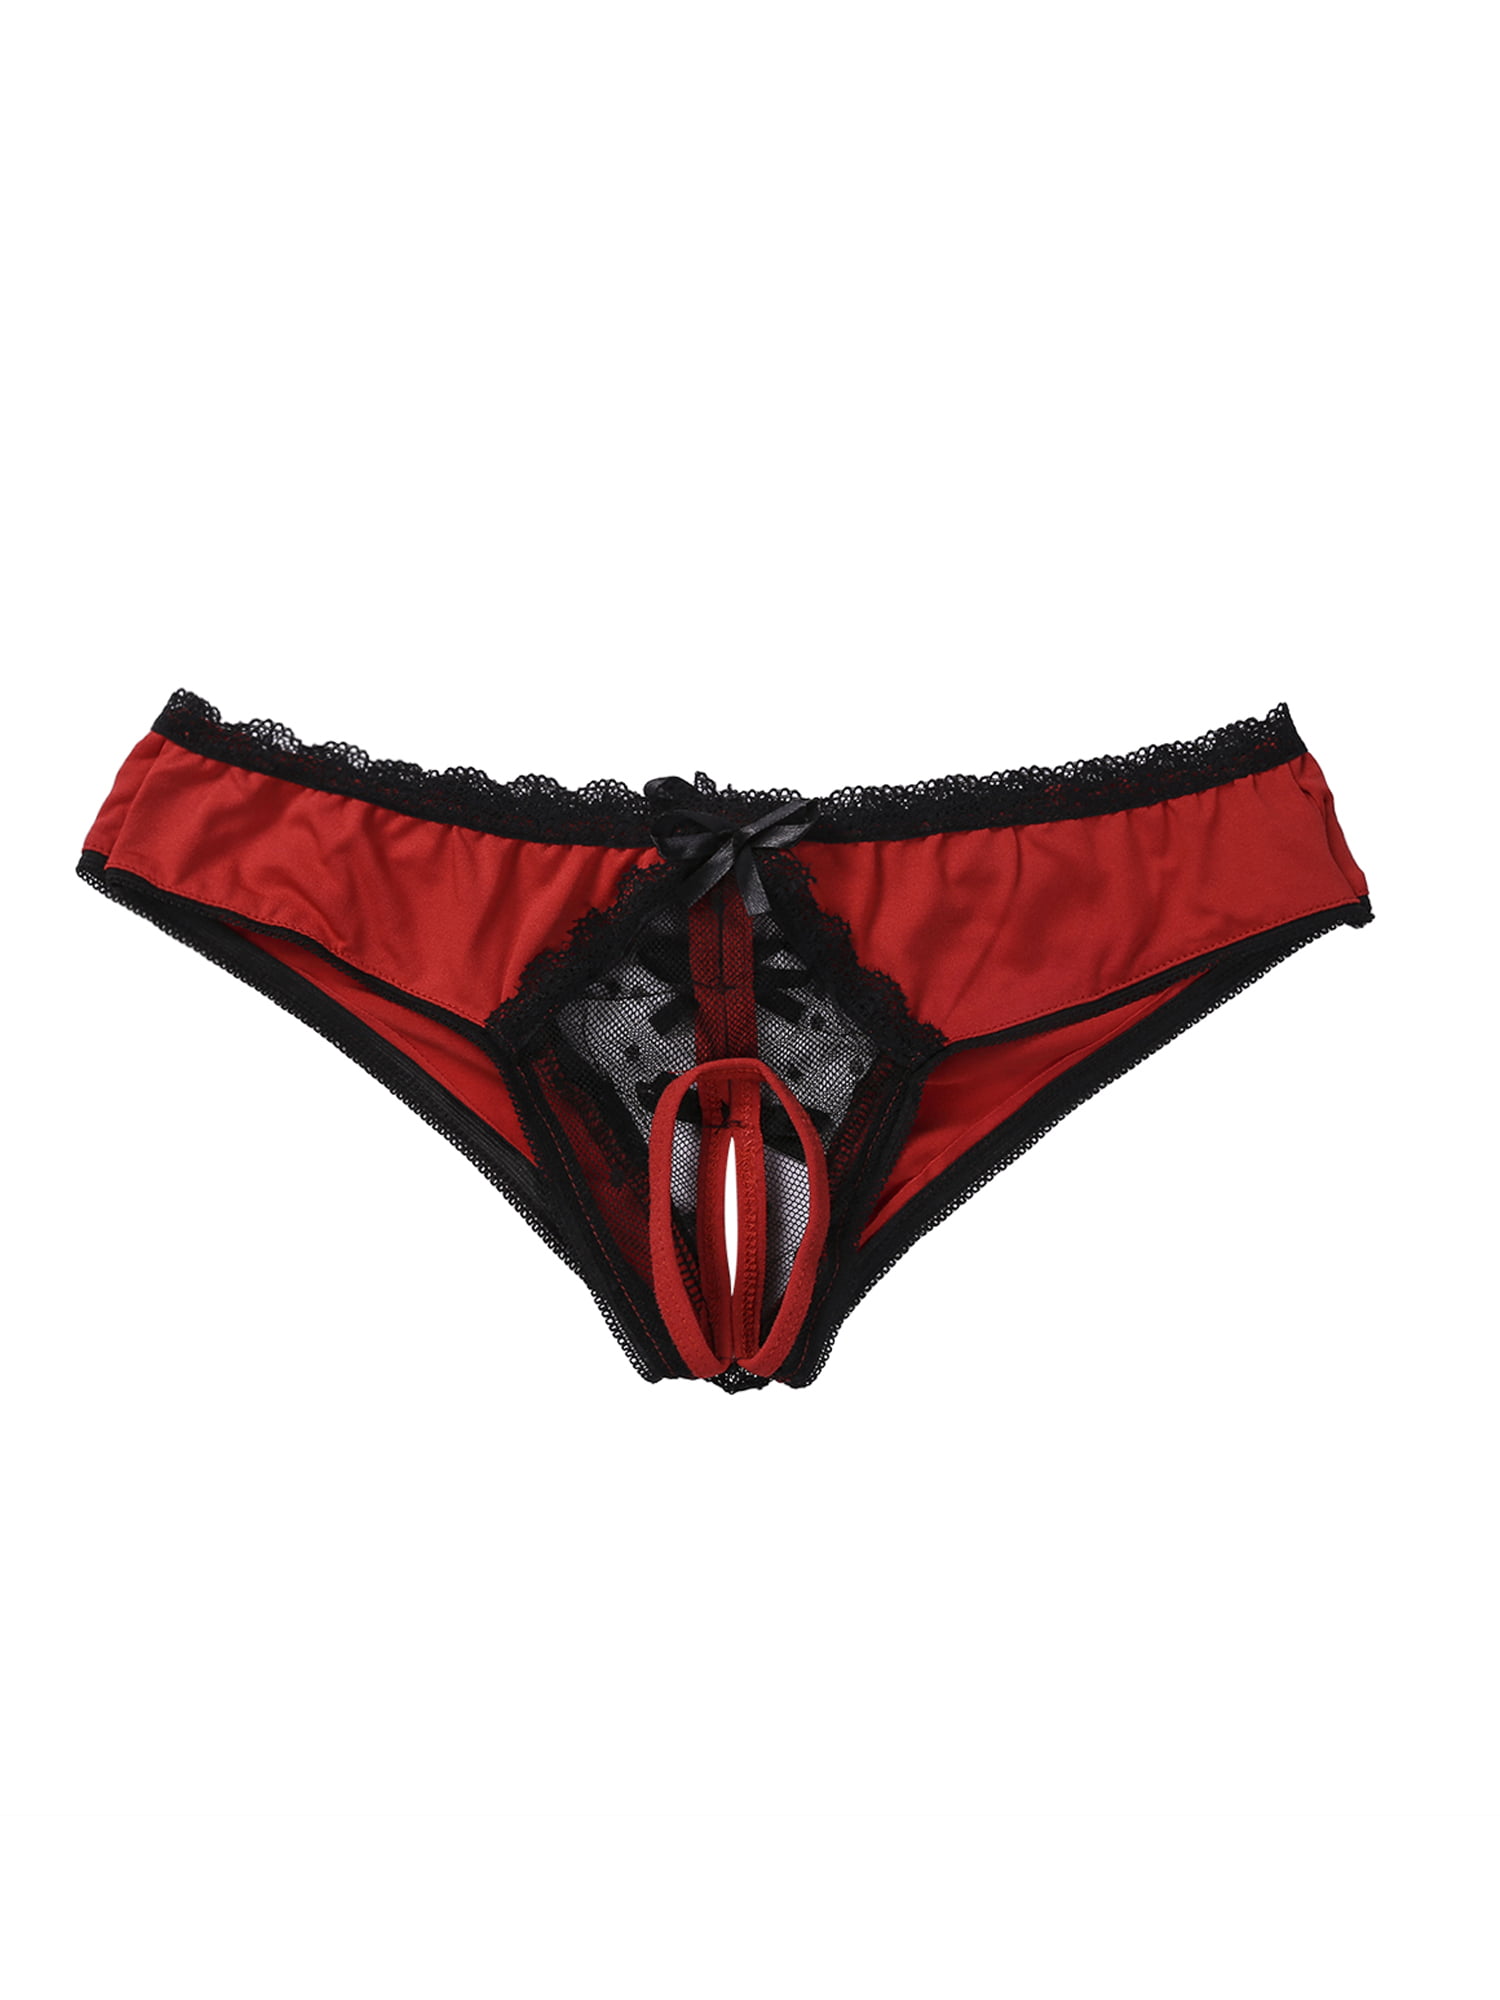 Calsunbaby Women Thongs Panties Open Crotch Crotchless Underwear Night  G-string M